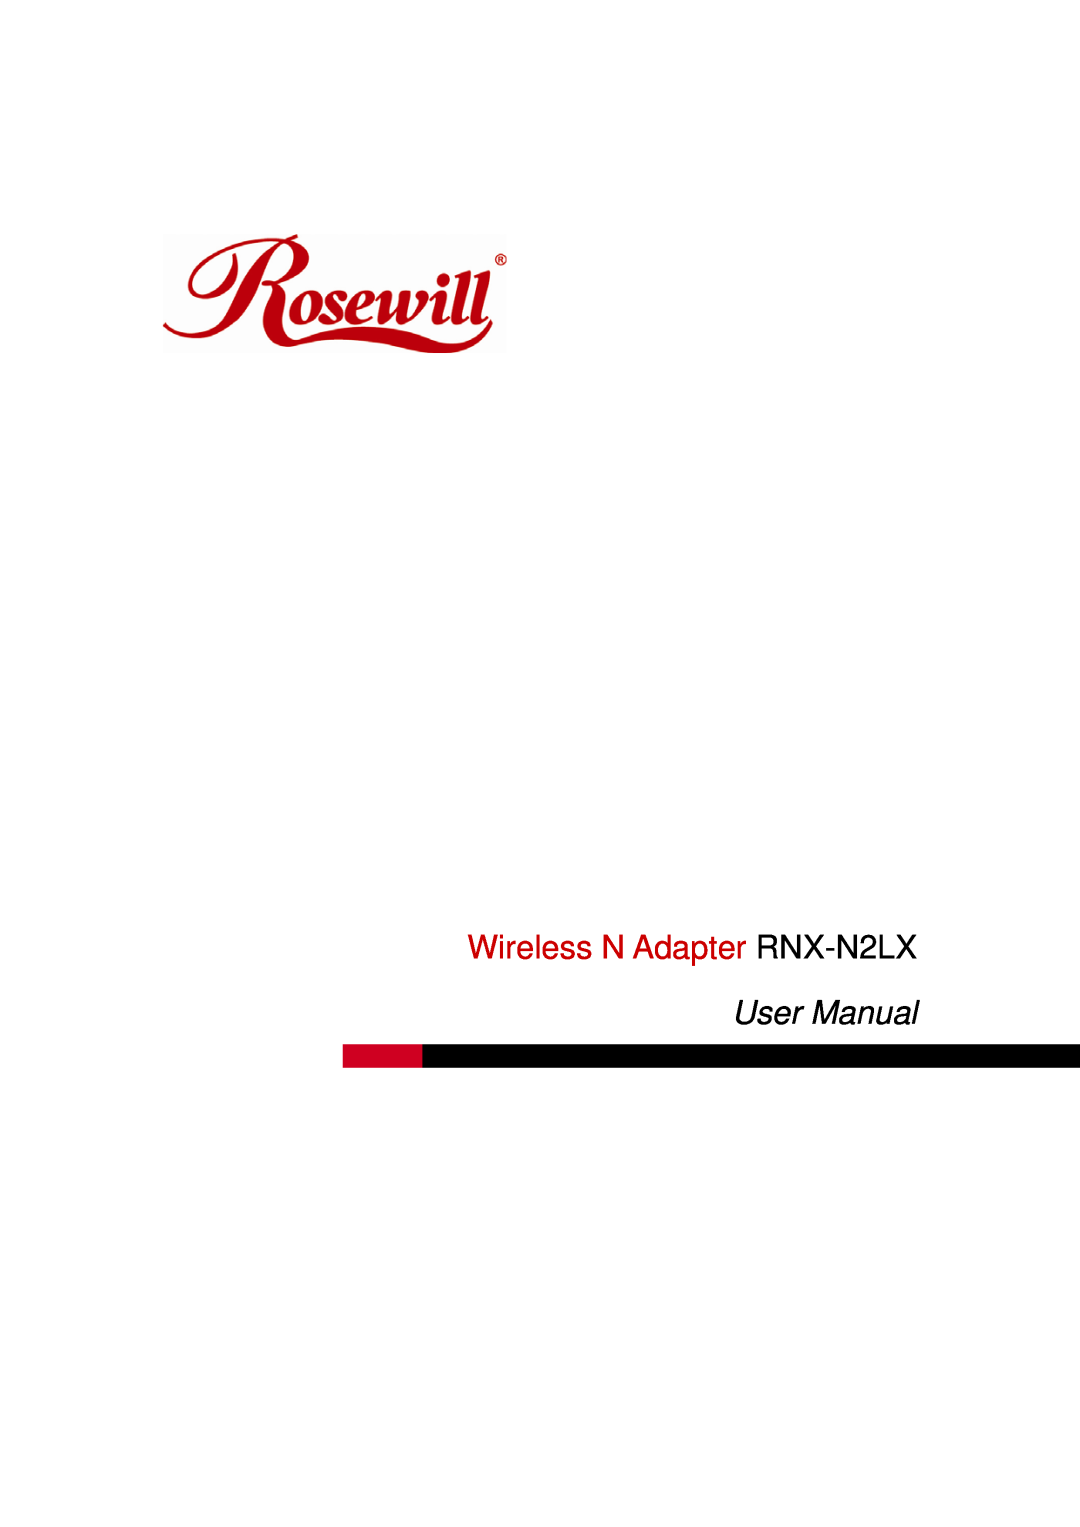 Rosewill user manual Wireless N Adapter RNX-N2LX, User Manual 